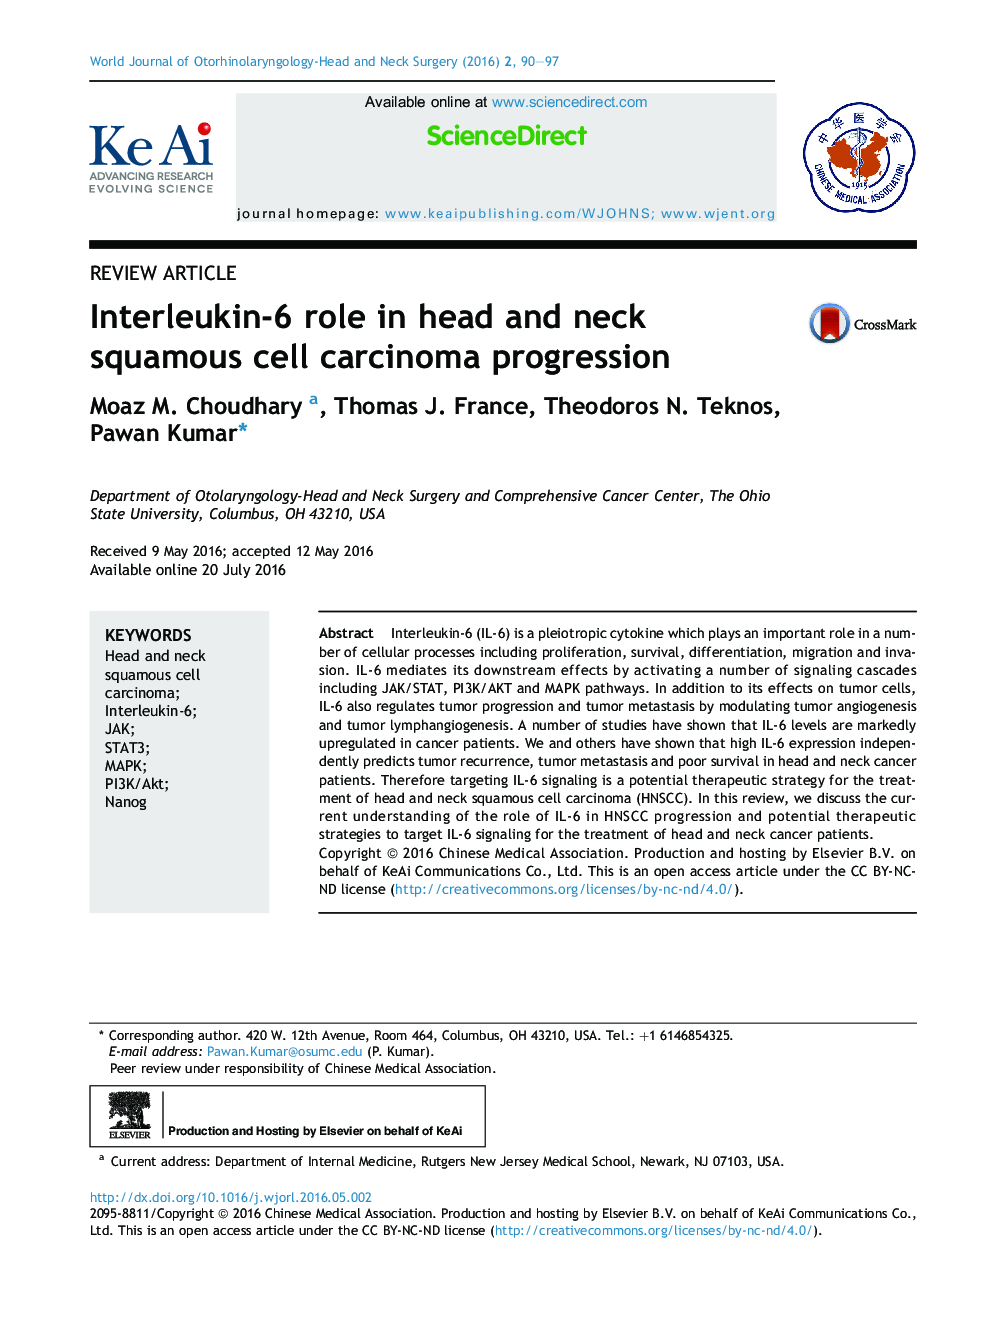 نقش اینترلوکین 6 در پیشرفت کارسینوم سلول سنگفرشی سر و گردن 